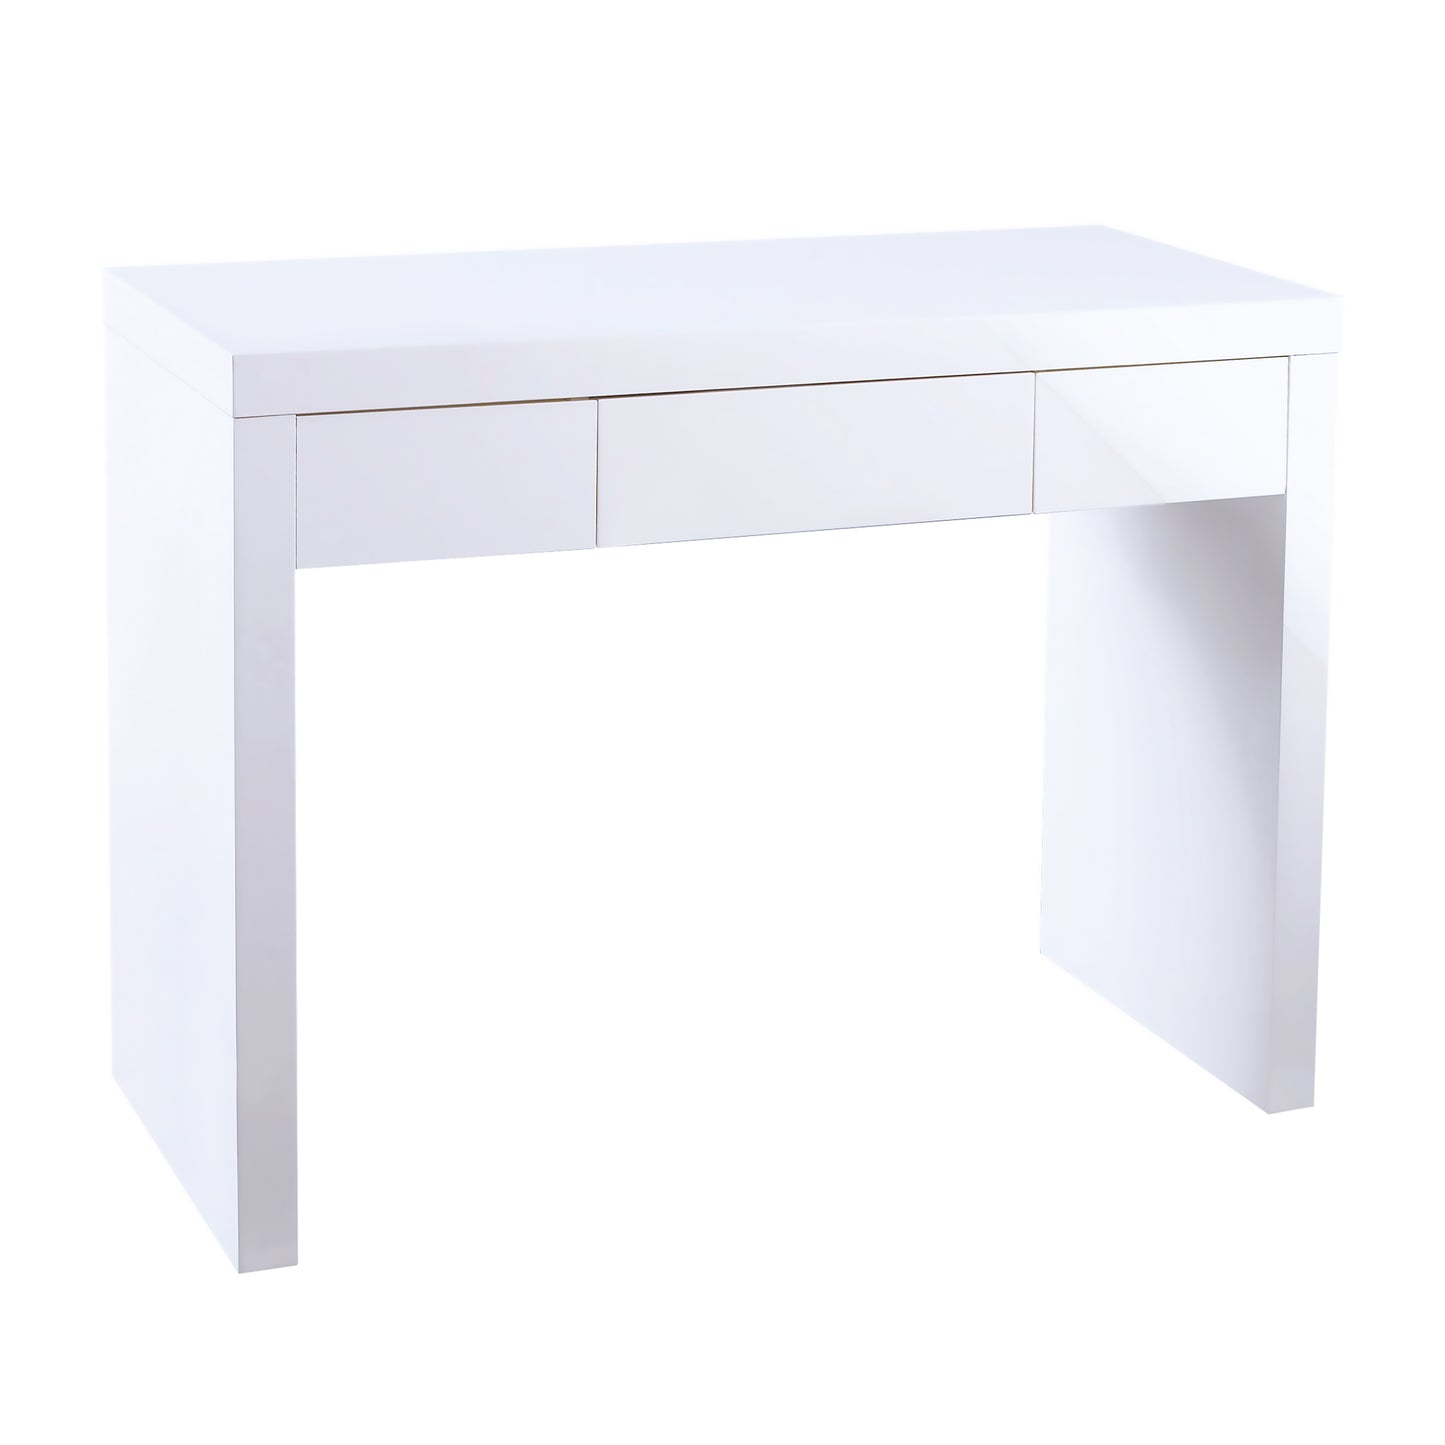 Puro Bedroom Furniture in White Gloss